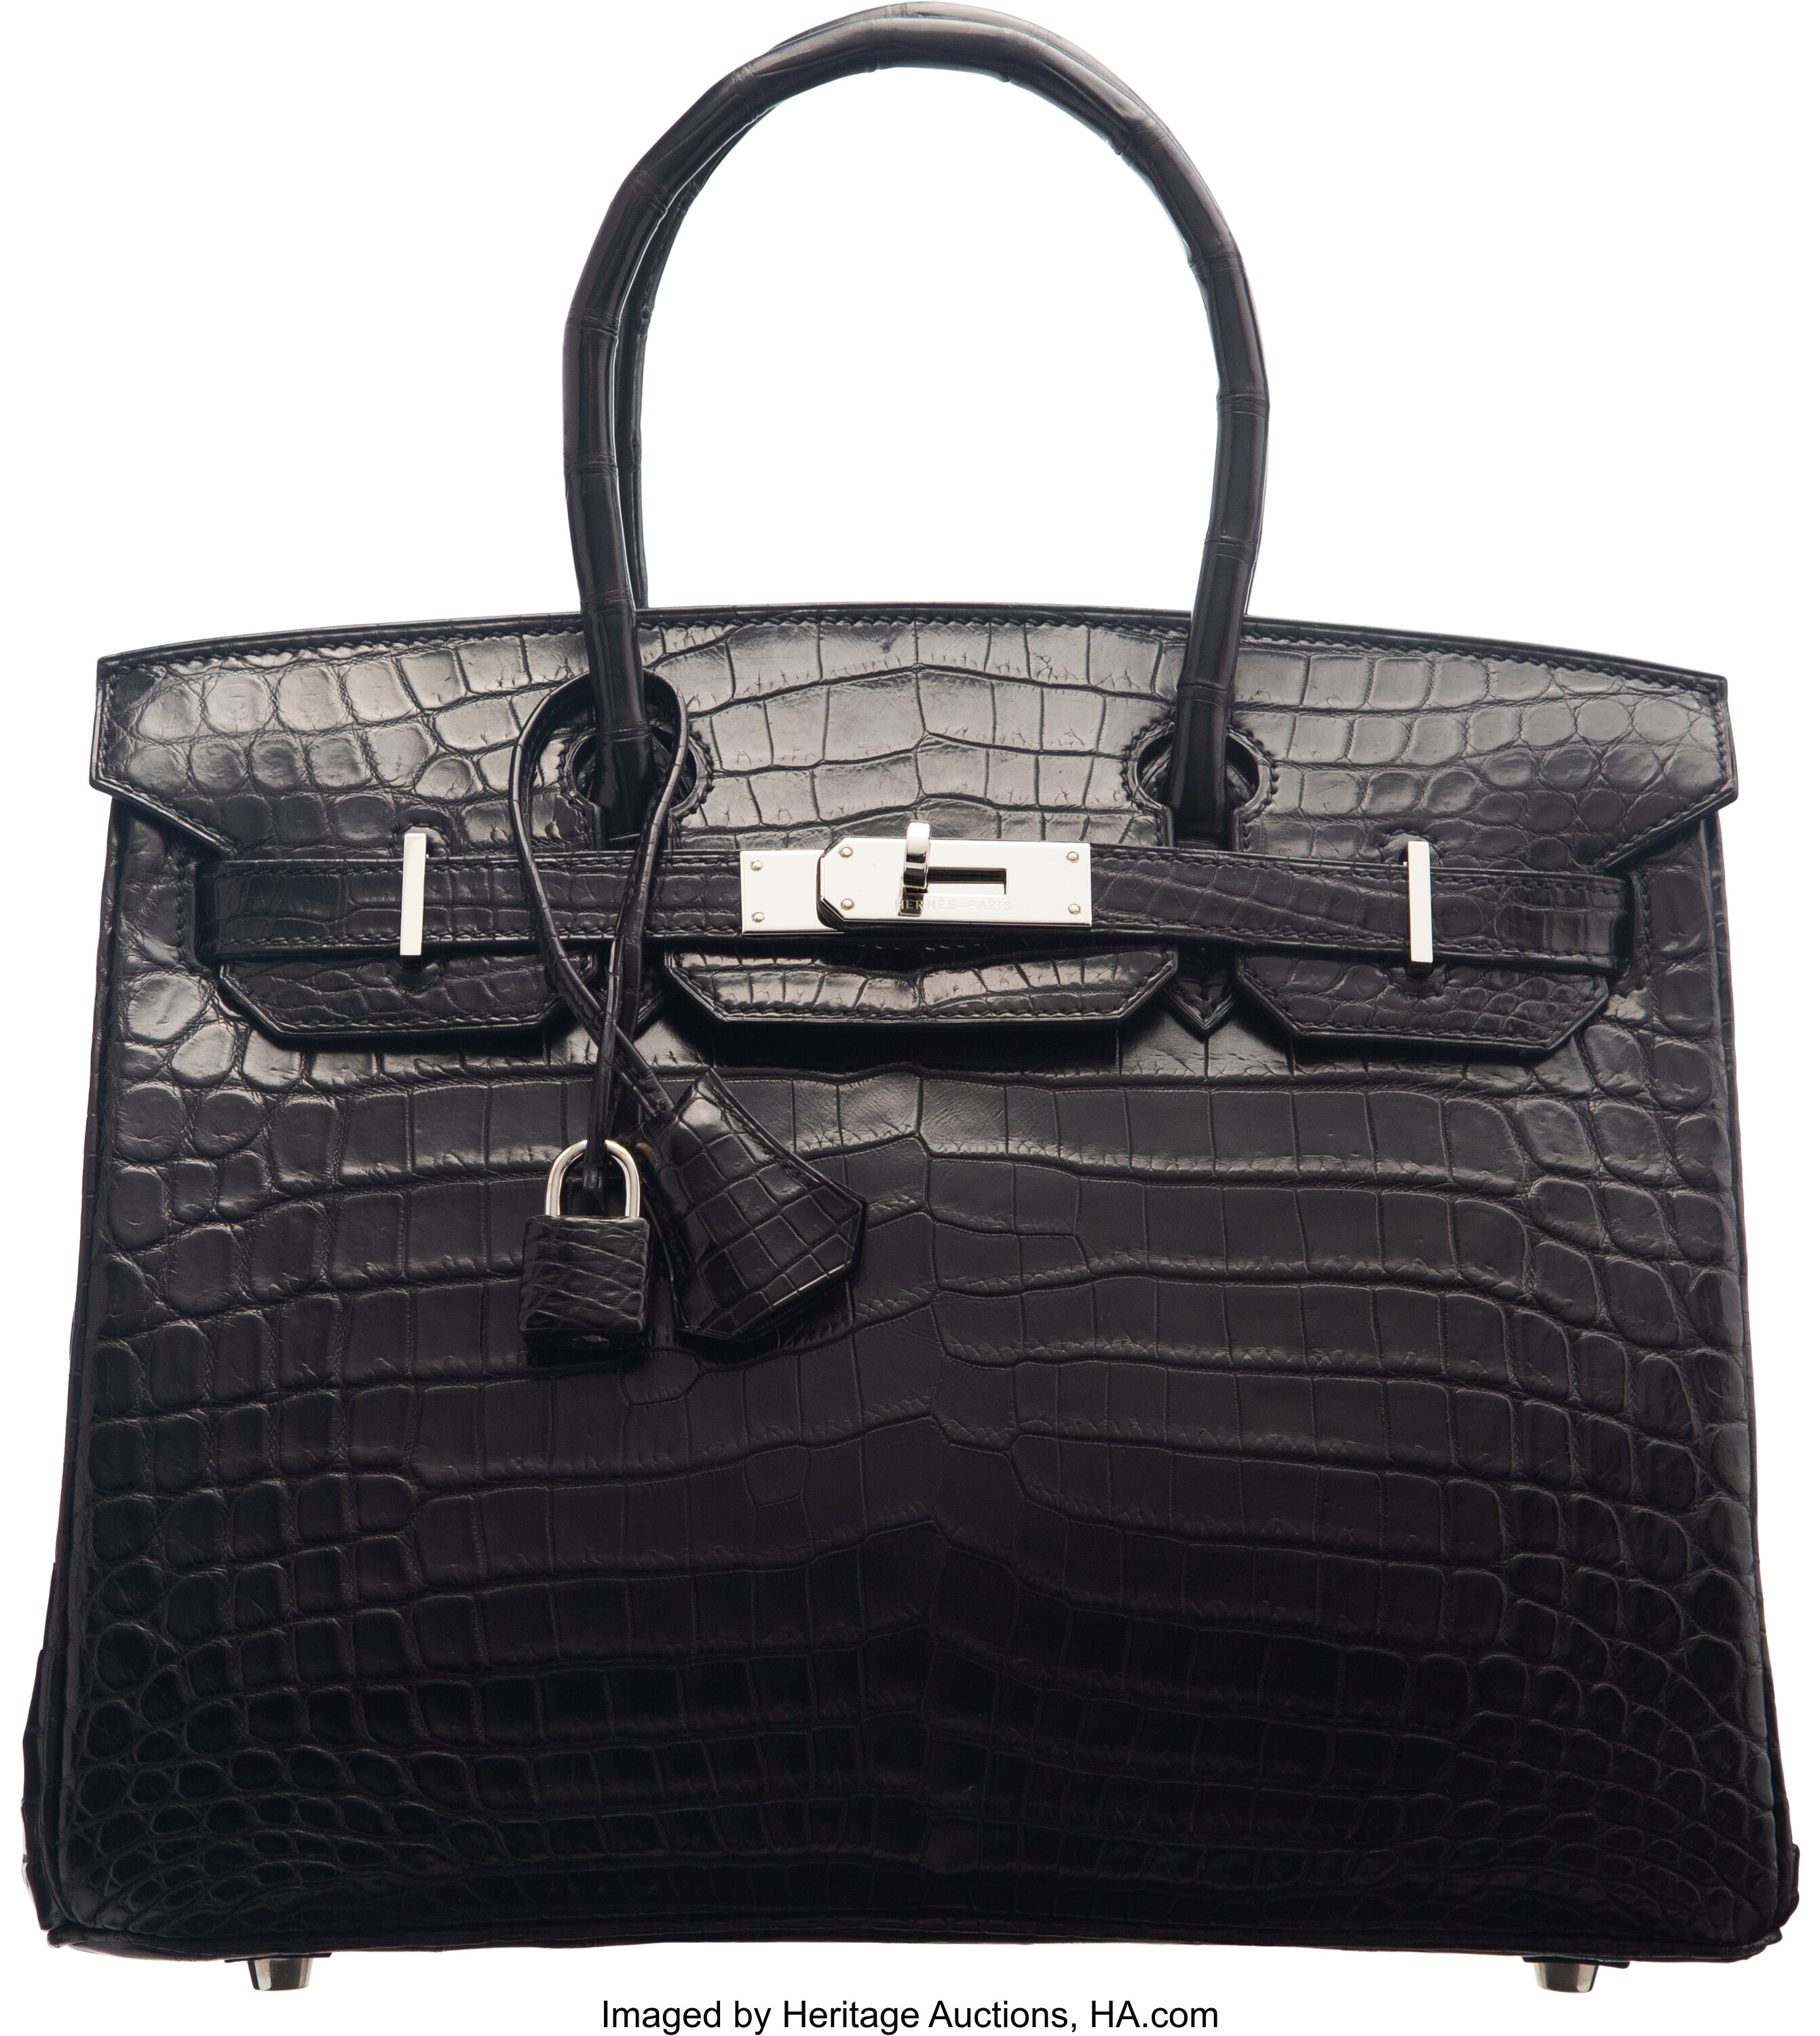 Hermès 30cm Matte Black Niloticus Crocodile Birkin Bag with